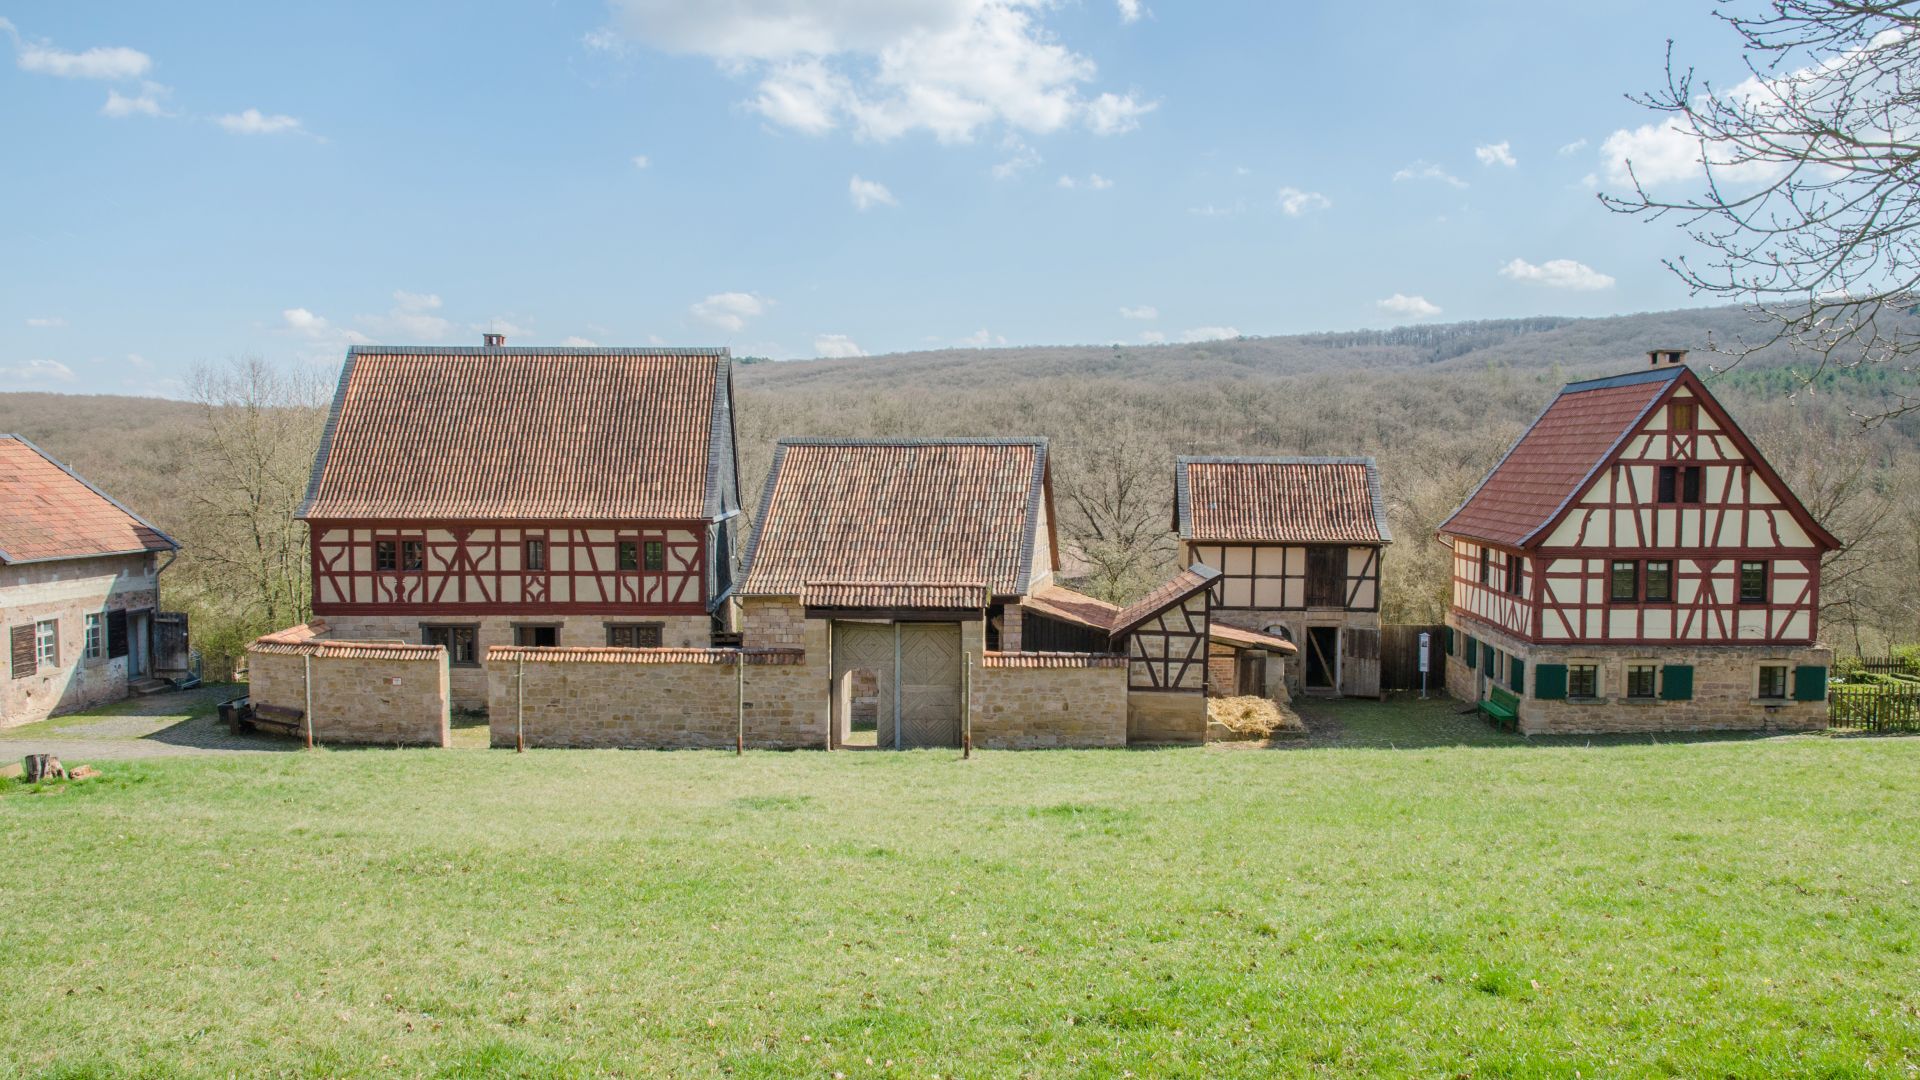 Bad Sobernheim: historic farms in the Bad Sobernheim open-air museum